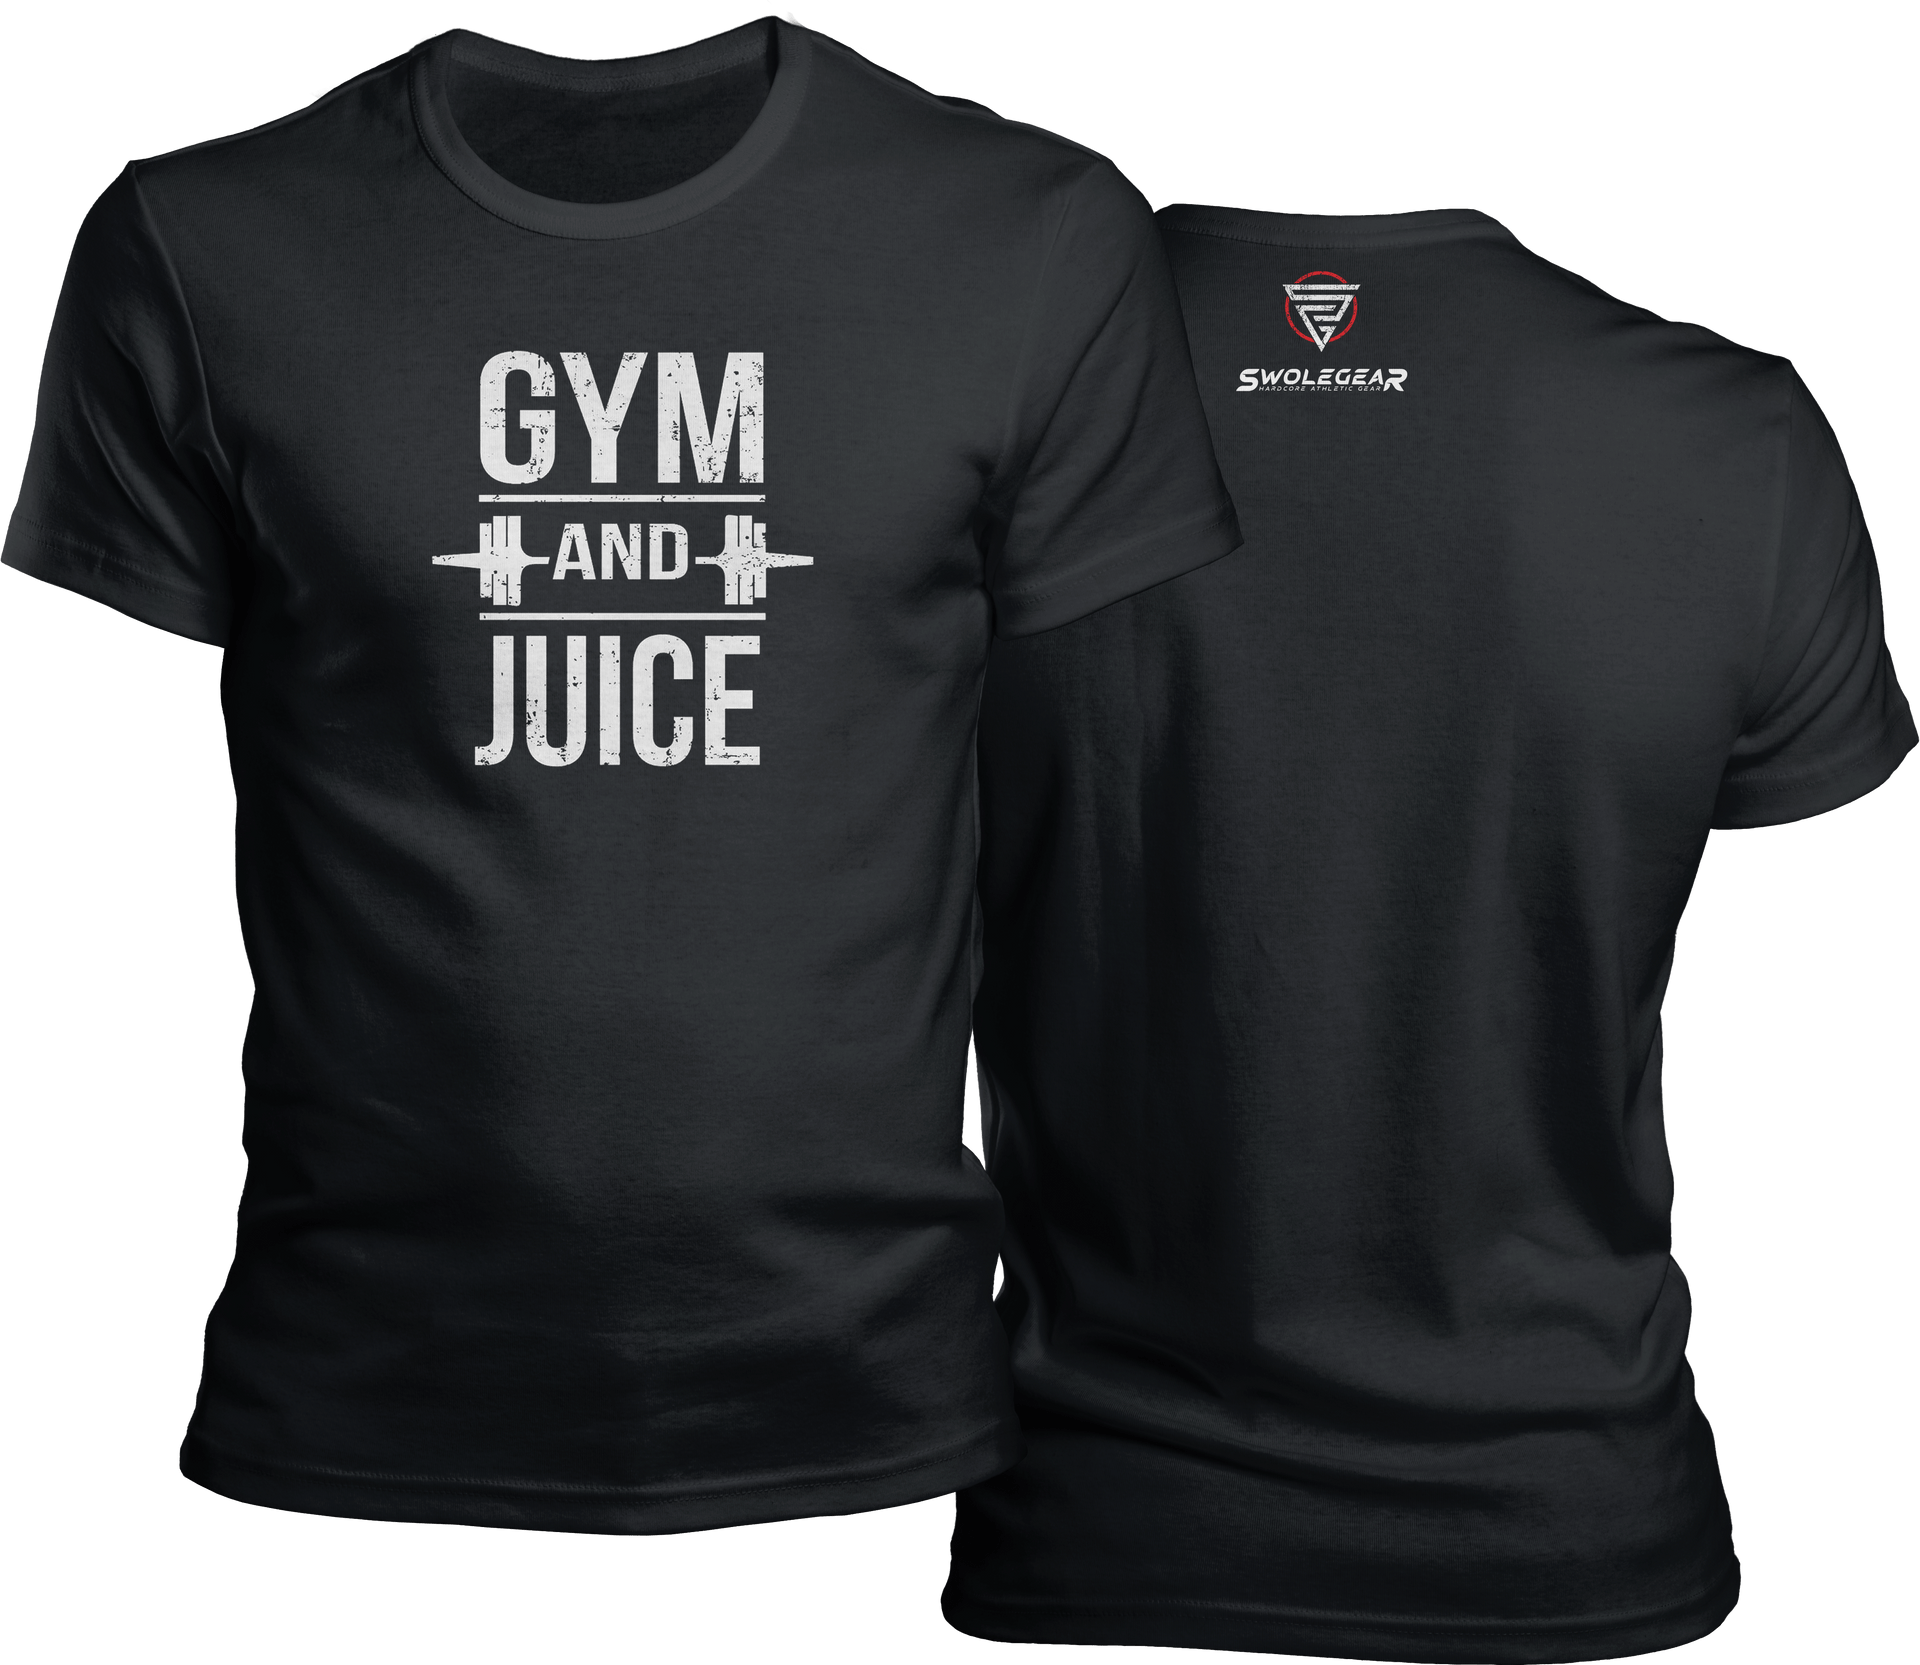 Gym & Juice